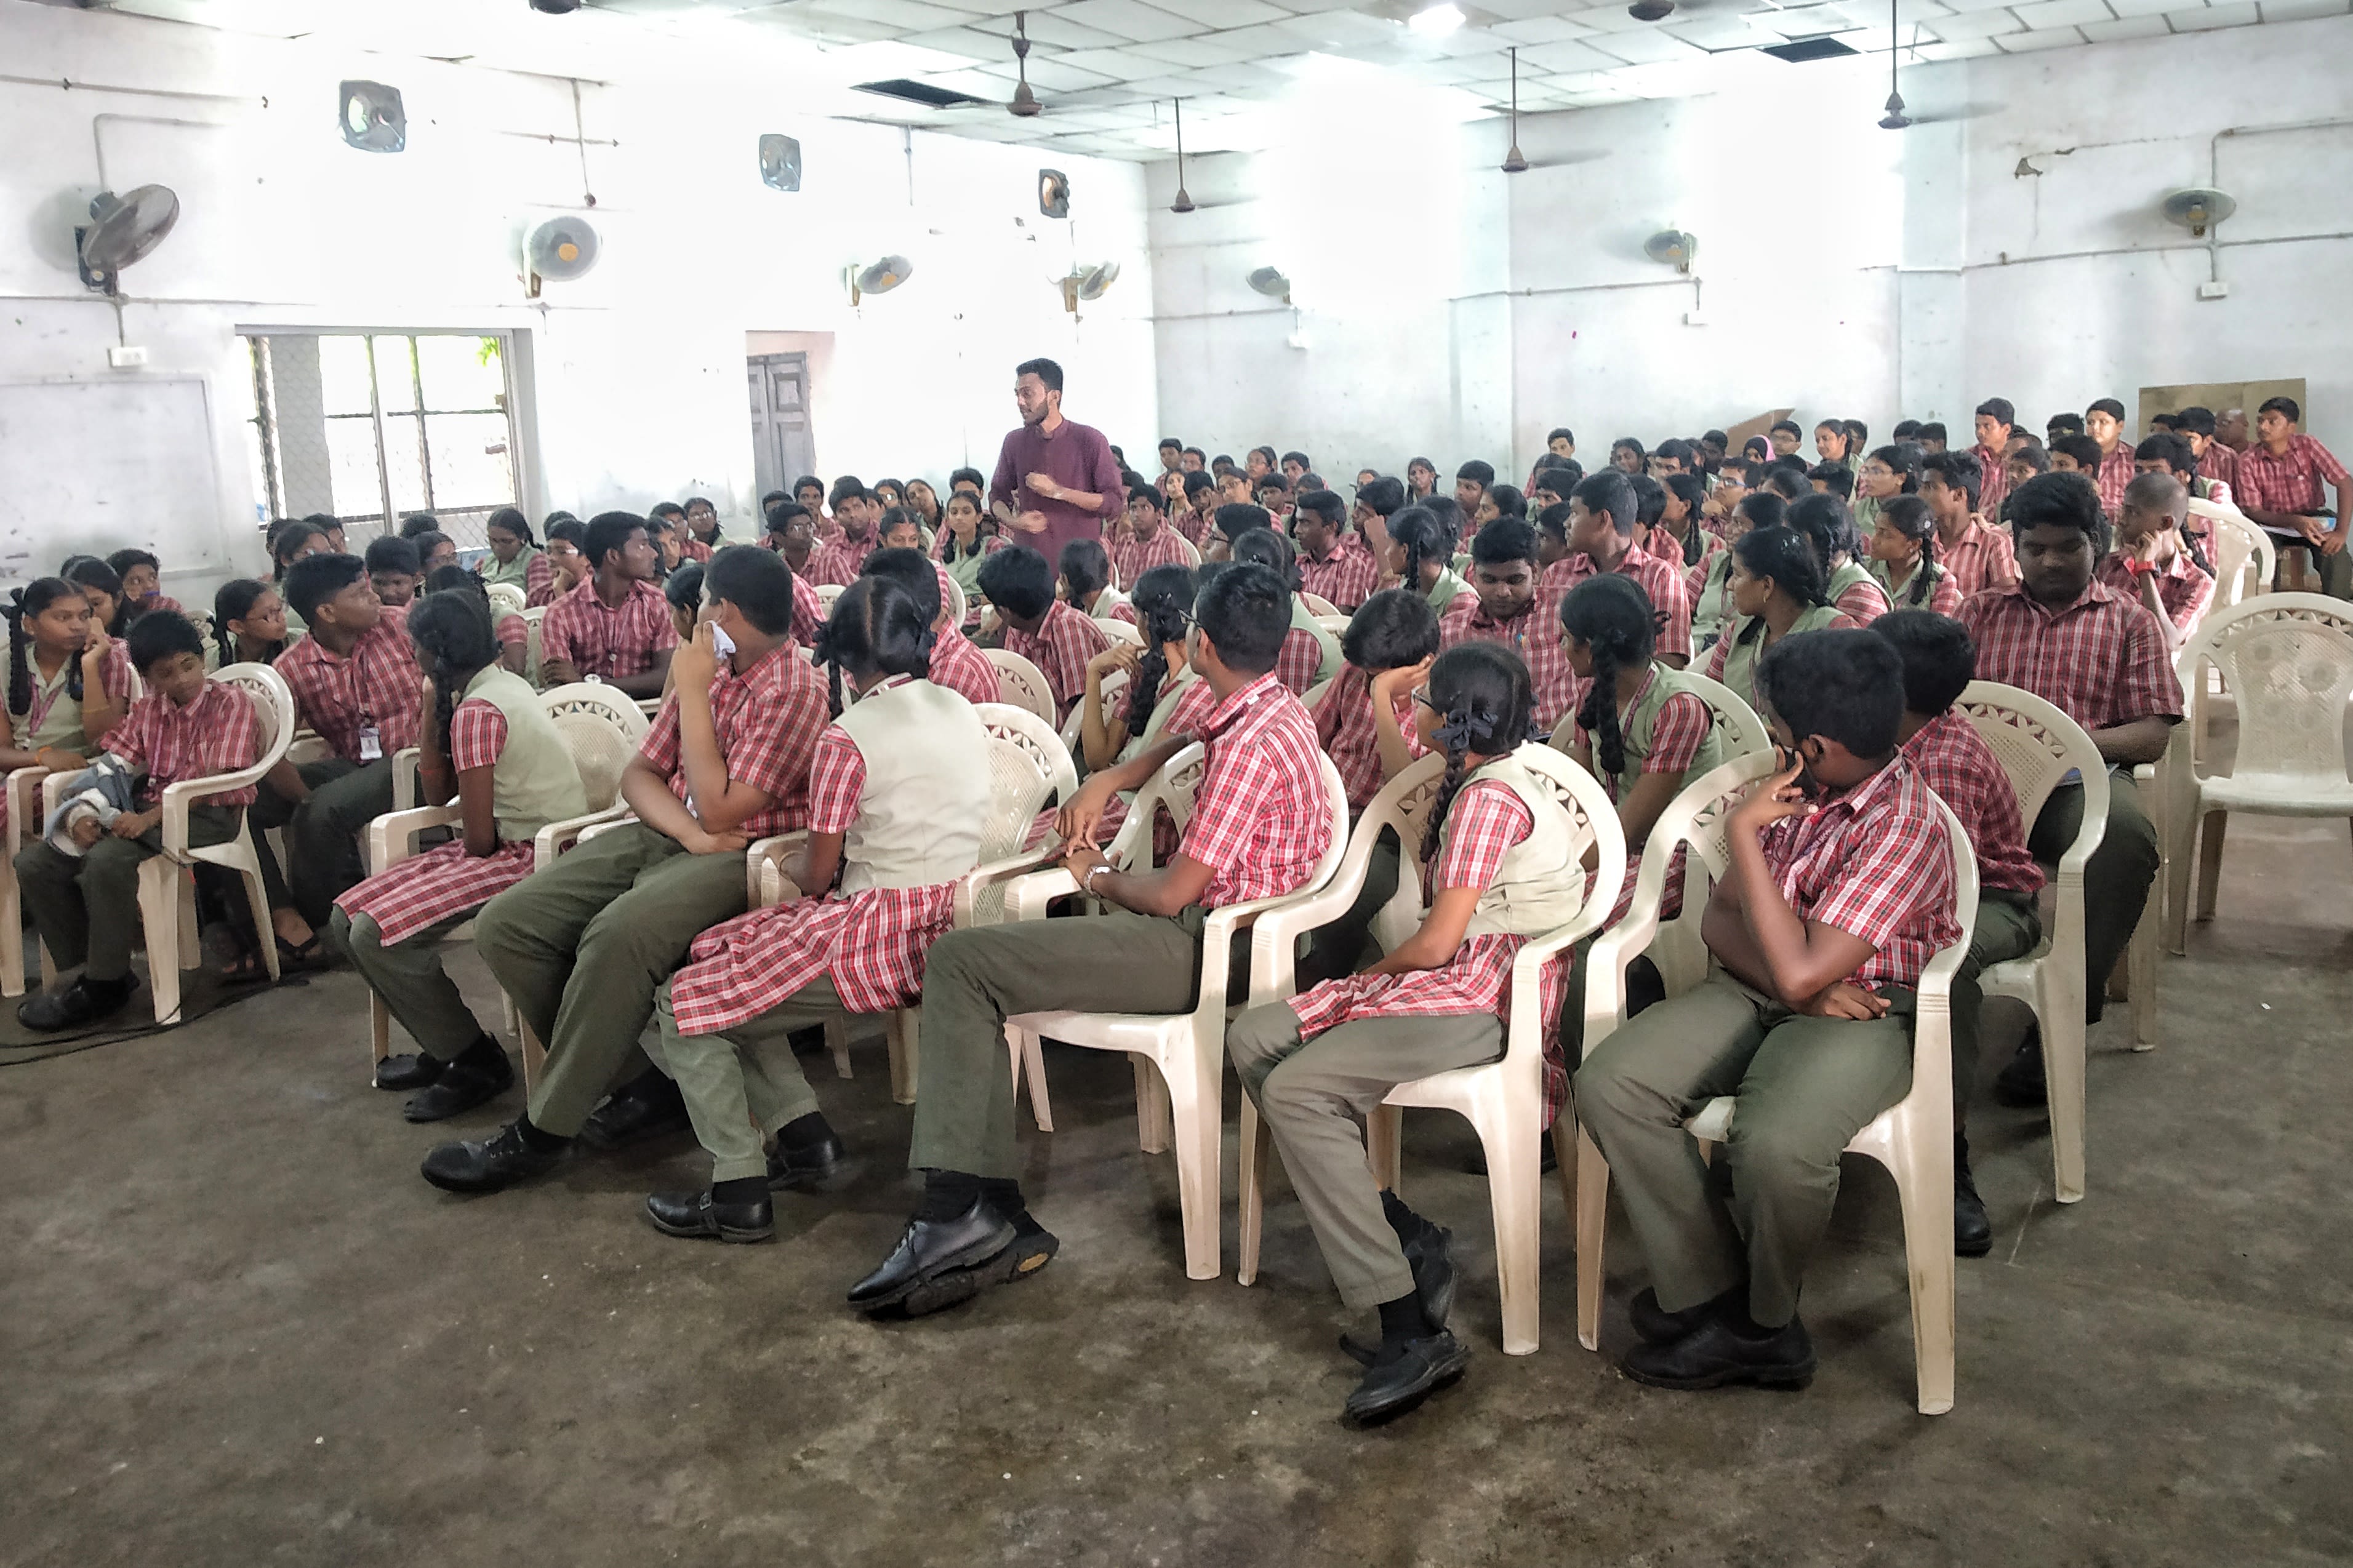 India has an unlikely new type of period health educators: men | CNN